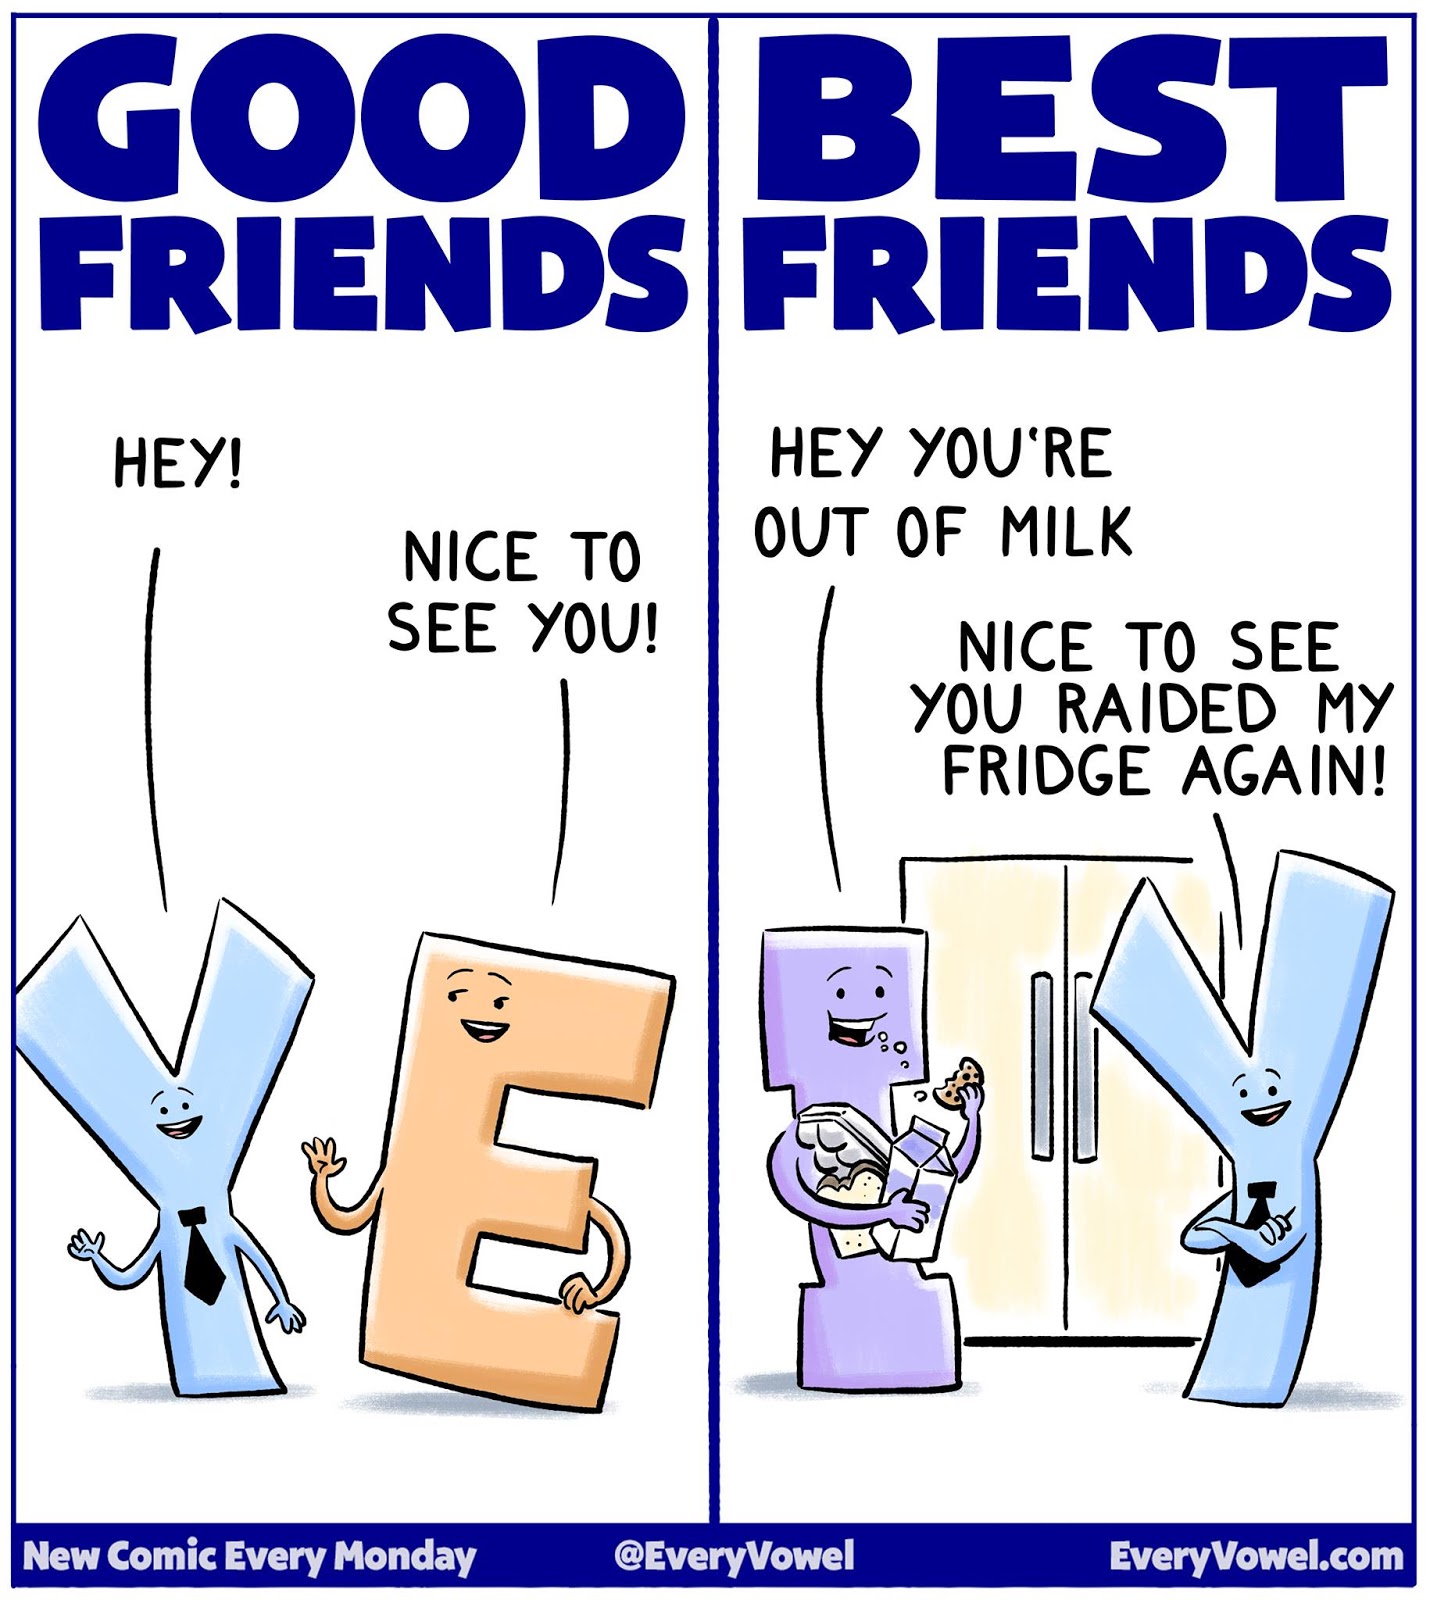 Как переводится friend is. Friends vs friends. Тони би friend vs friend. Hey friends доска. Good friend vs. best friend - Blogilates.